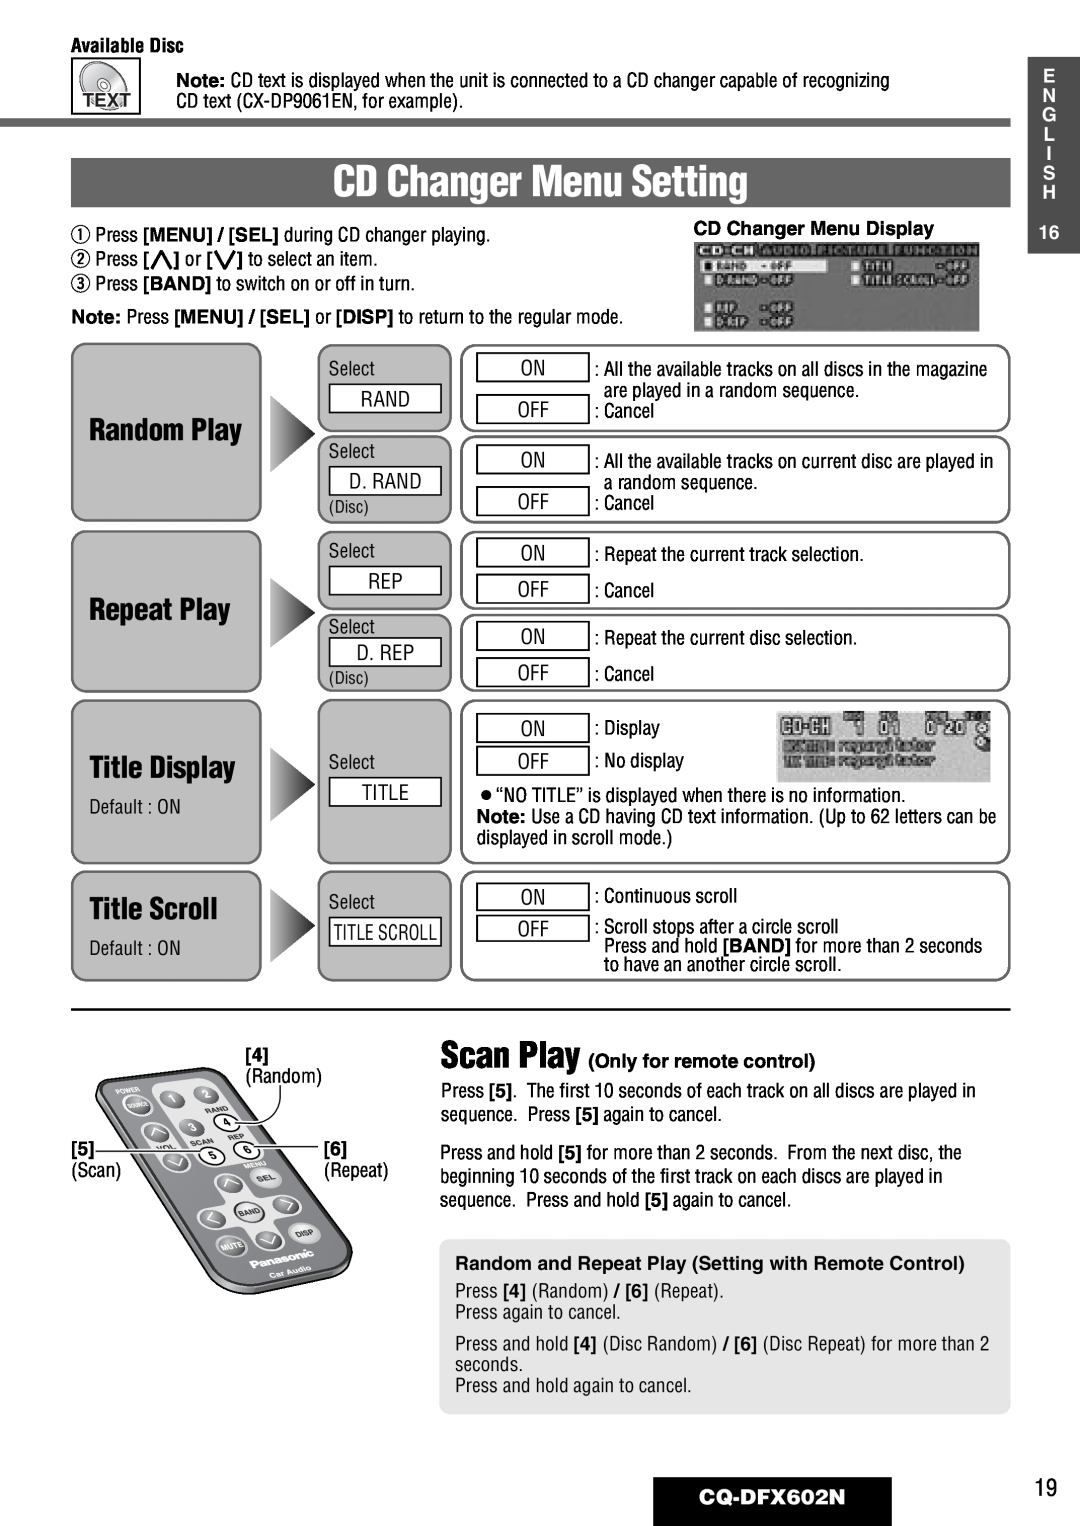 Panasonic manual CD Changer Menu Setting, Random Play Repeat Play Title Display, Title Scroll, CQ-DFX602N19 